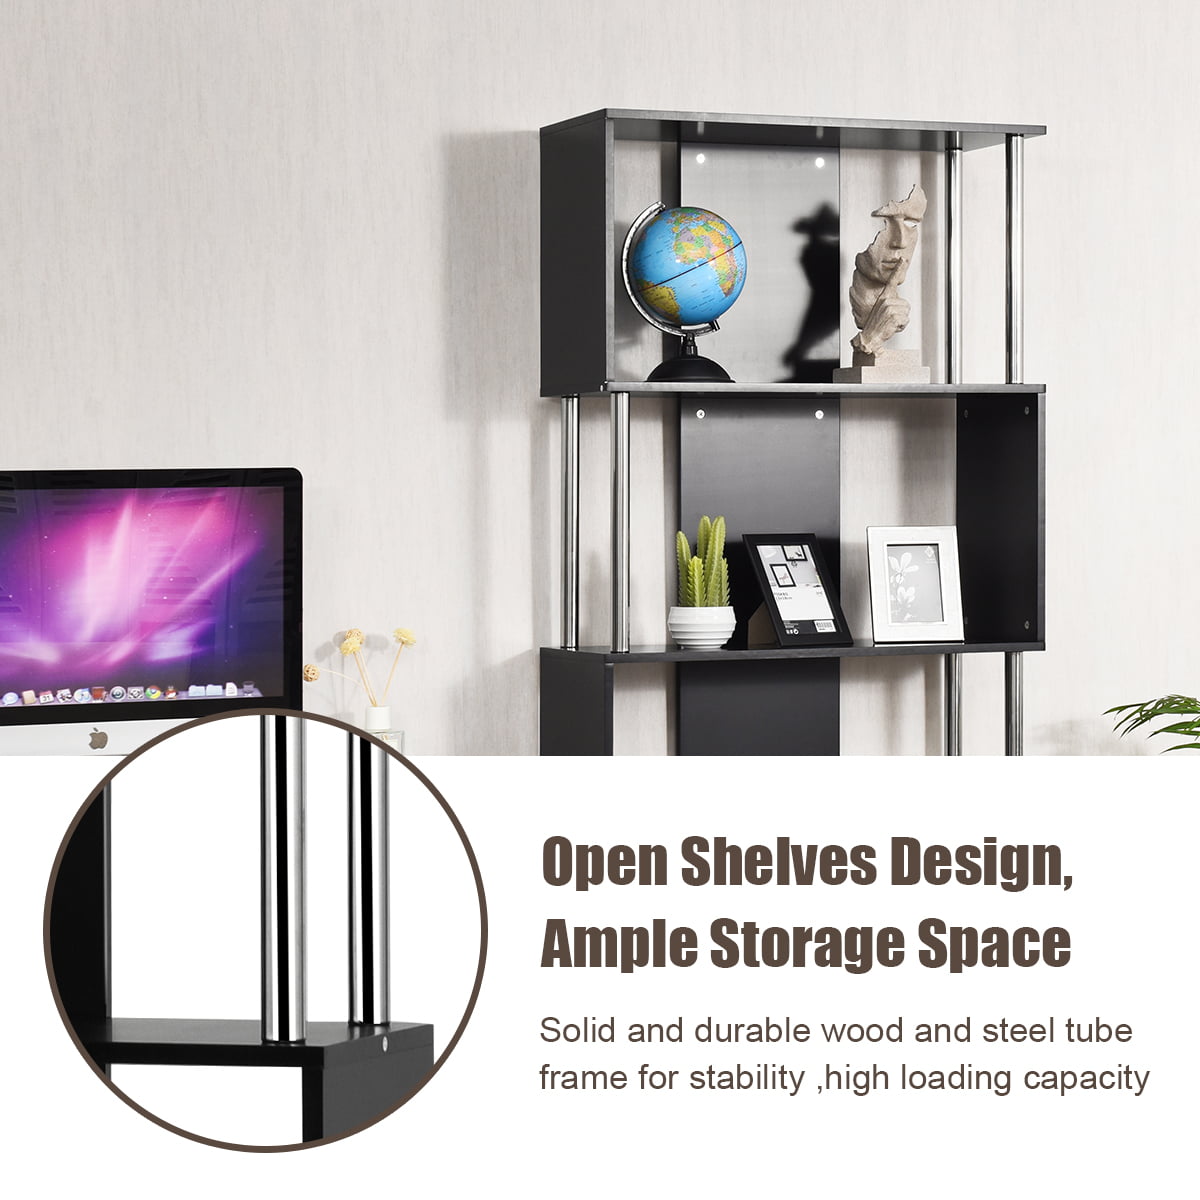 4-Tier Bookcase Modern Display Shelves Organizer Snaking Storage Rack Home White